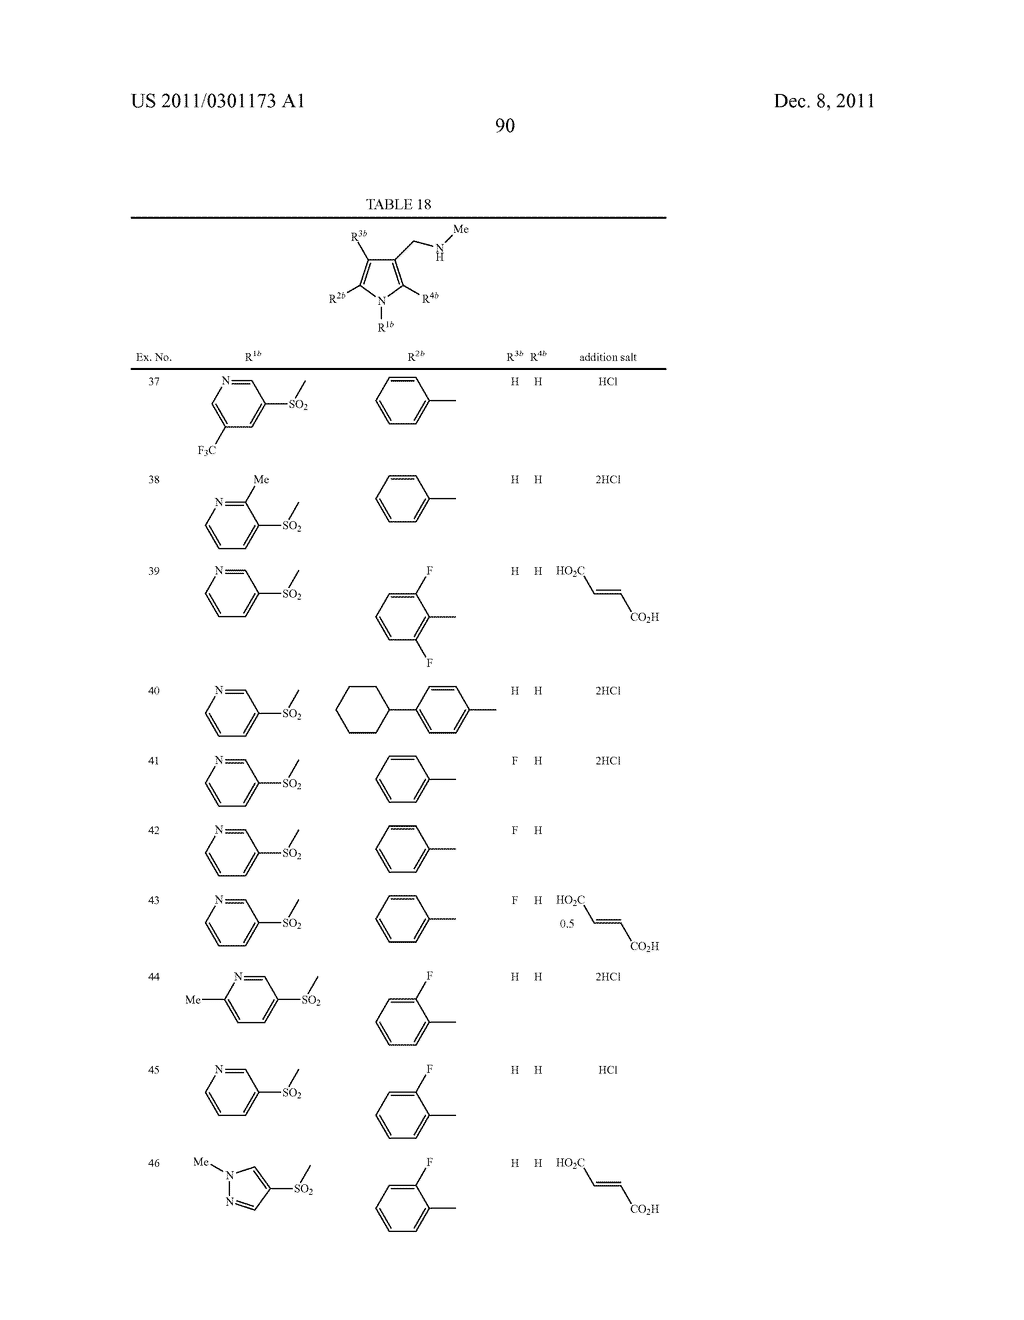 1-HETEROCYCLYLSULFONYL, 3-AMINOMETHYL, 5- (HETERO-) ARYL SUBSTITUTED     1-H-PYRROLE DERIVATIVES AS ACID SECRETION INHIBITORS - diagram, schematic, and image 91